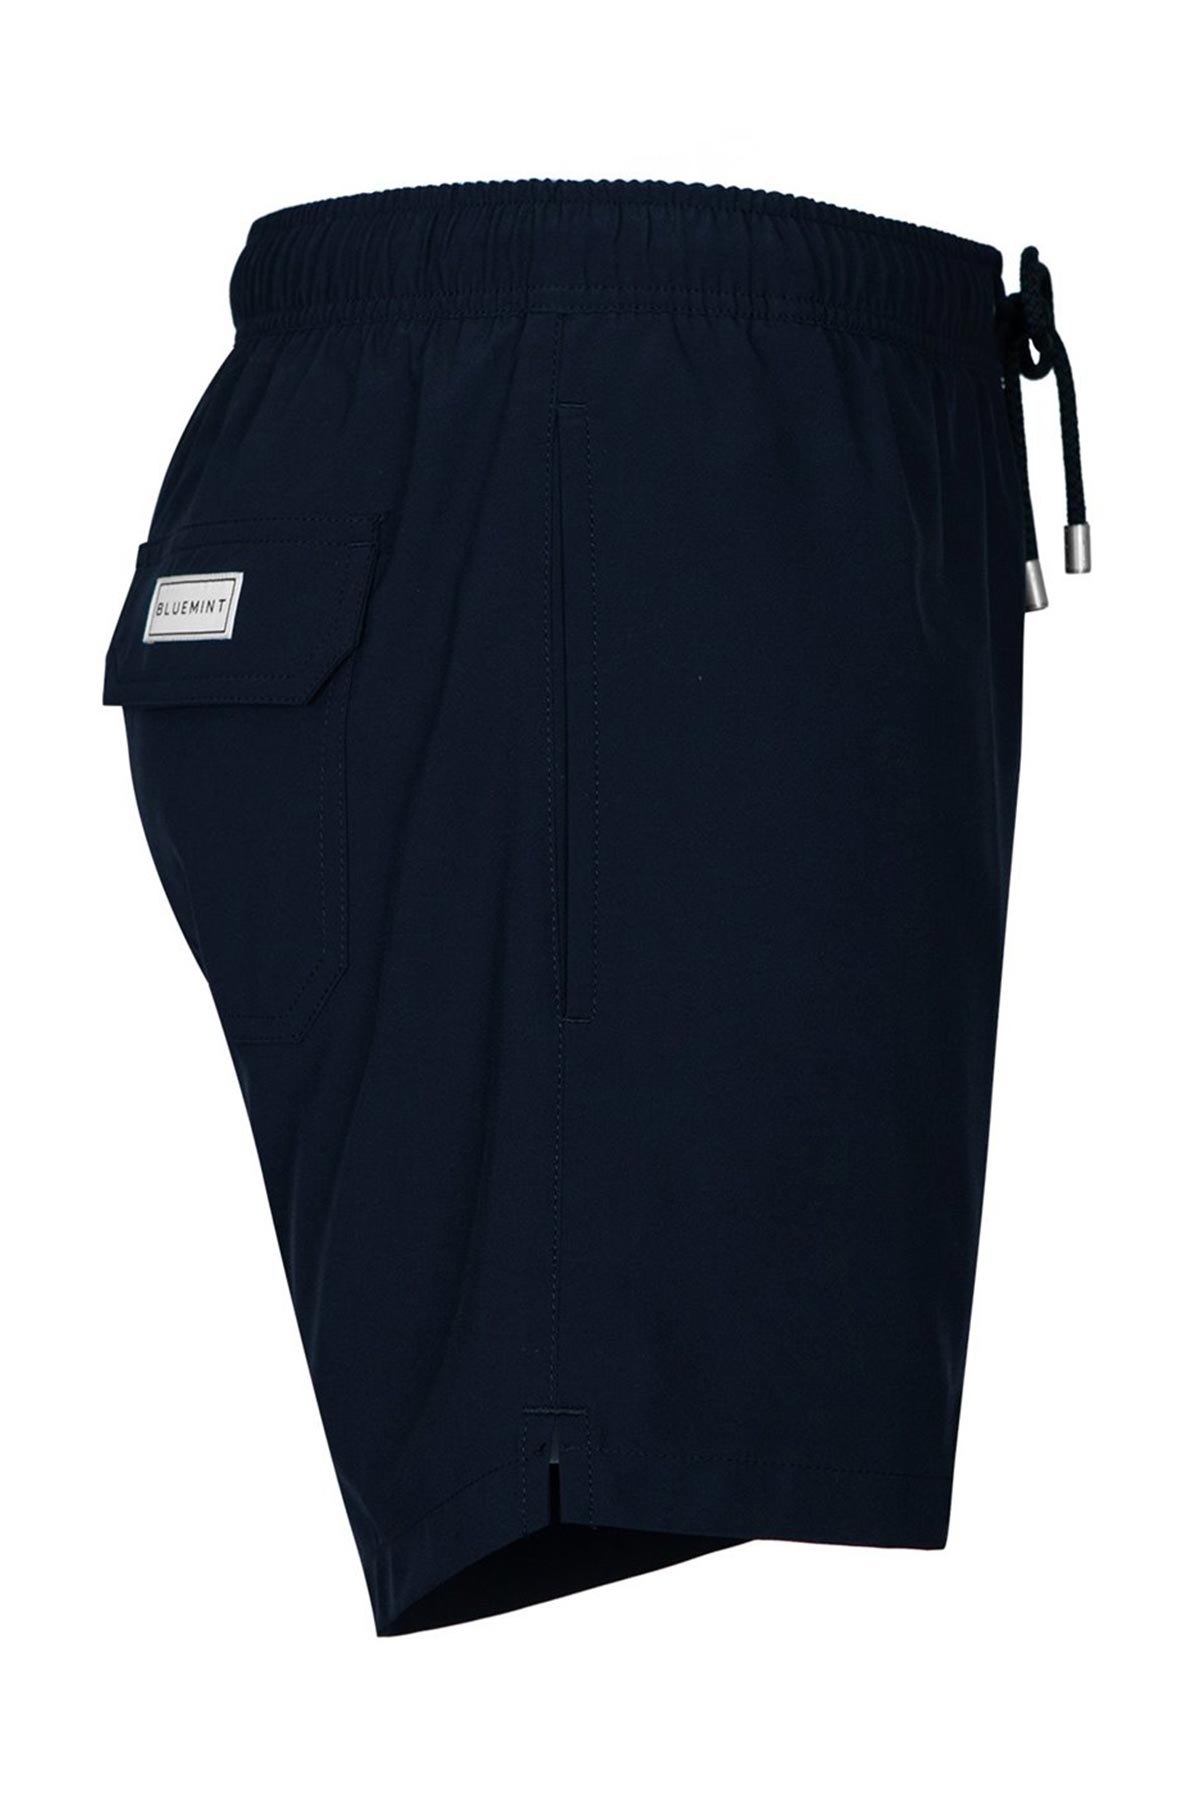 Bluemint Arthus Stretch Solid Dark Navy Şort Mayo-Libas Trendy Fashion Store